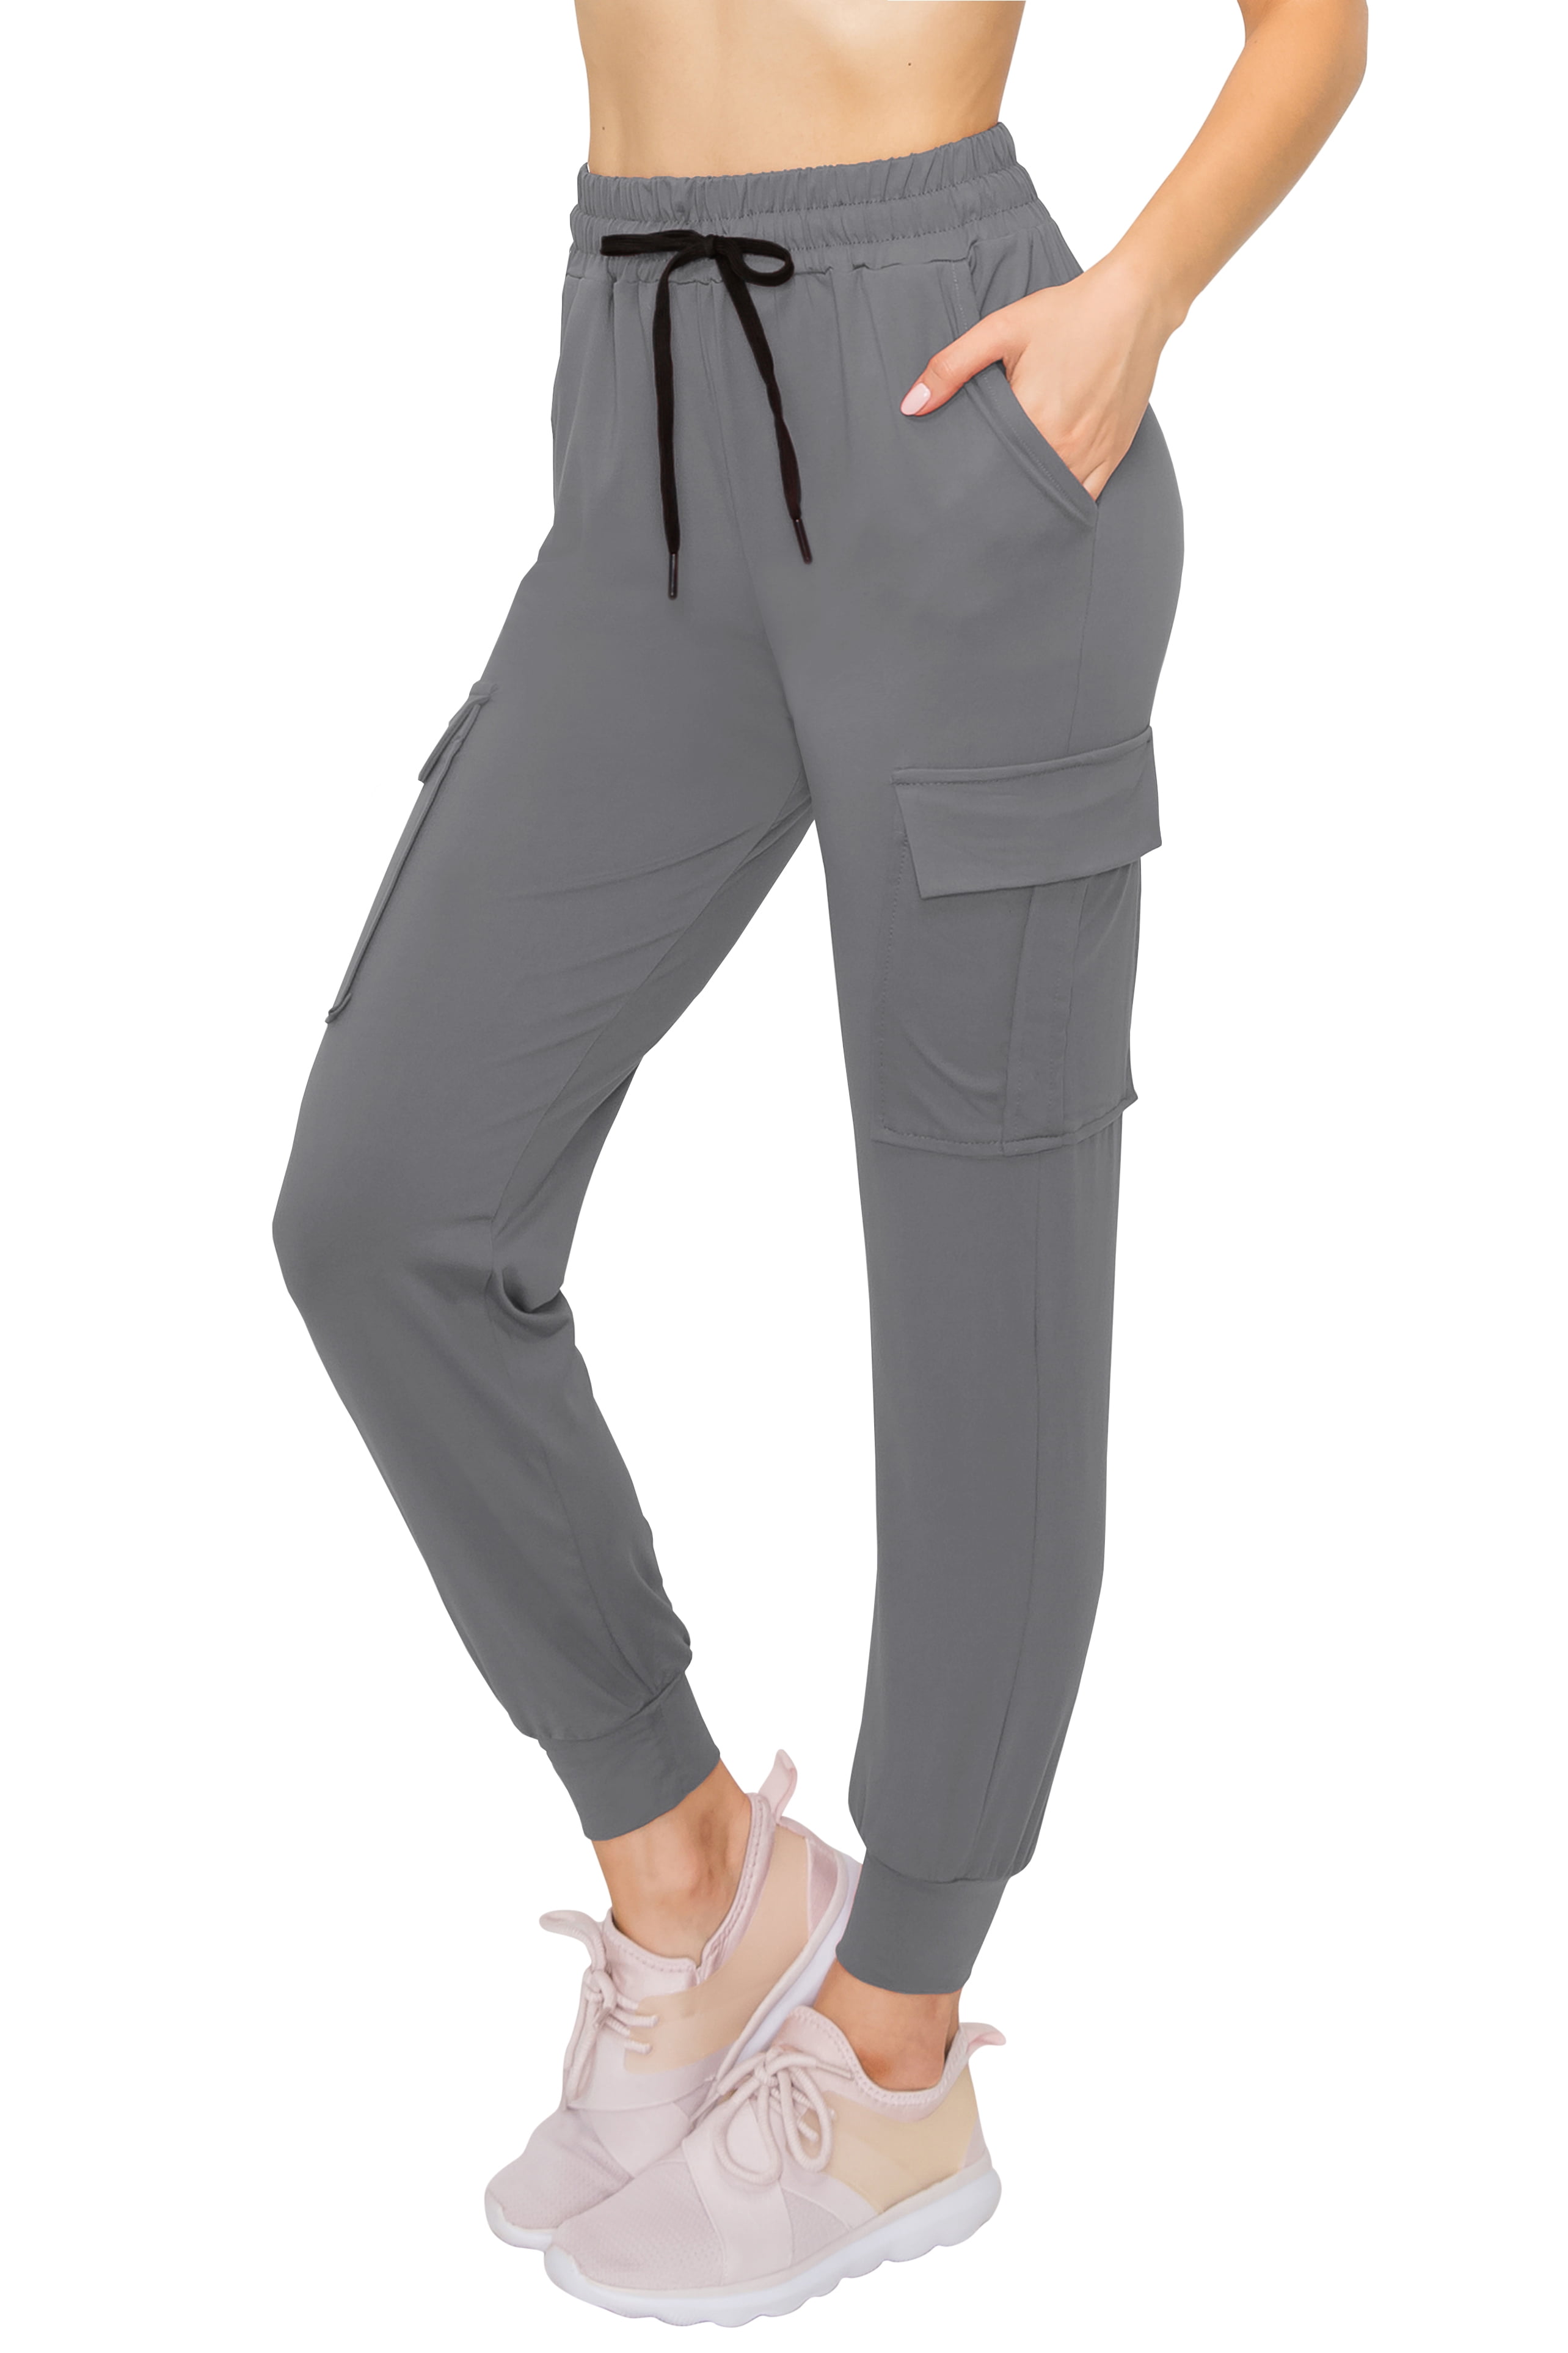 ALWAYS Women's Super Soft Casual Cargo Jogger Pants Grey 2XL - Walmart.com